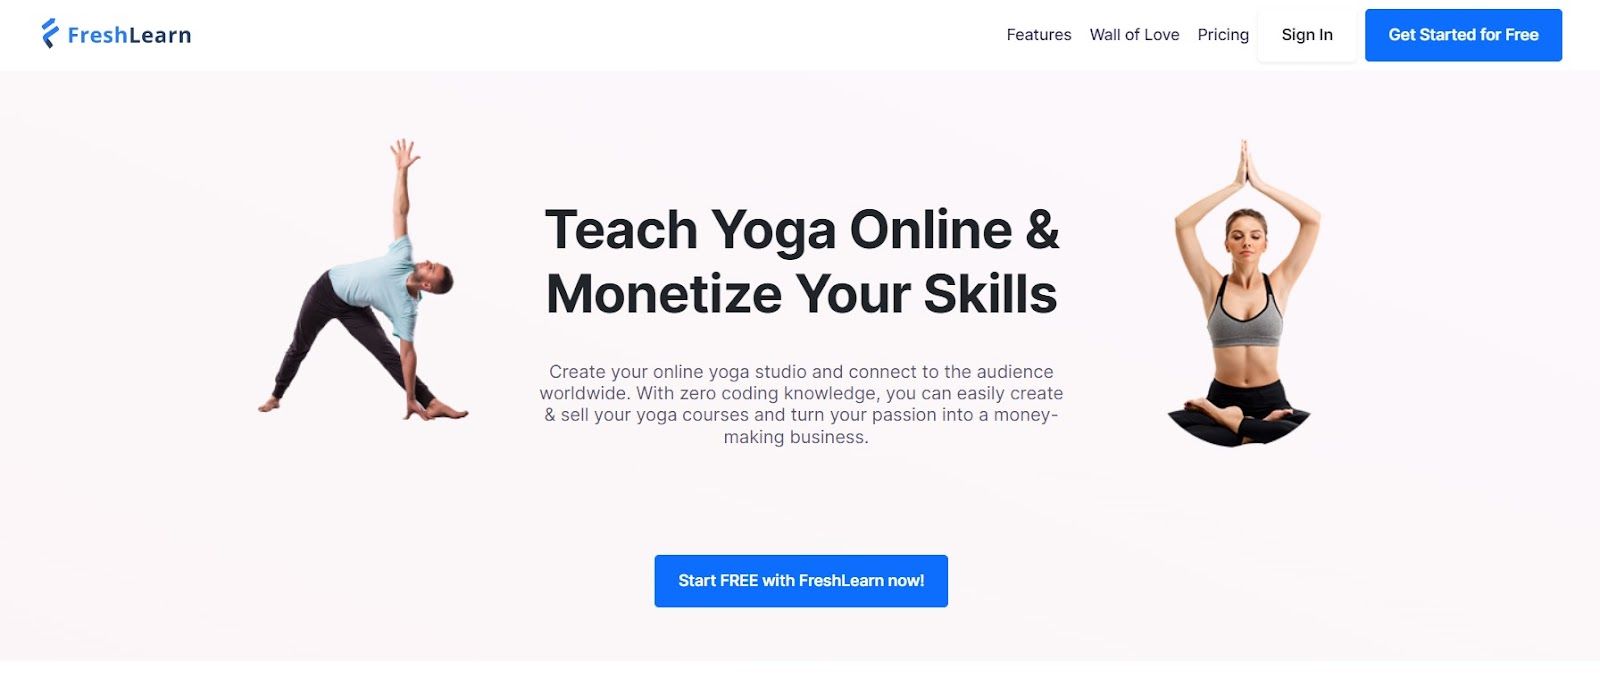 Teach Yoga Online